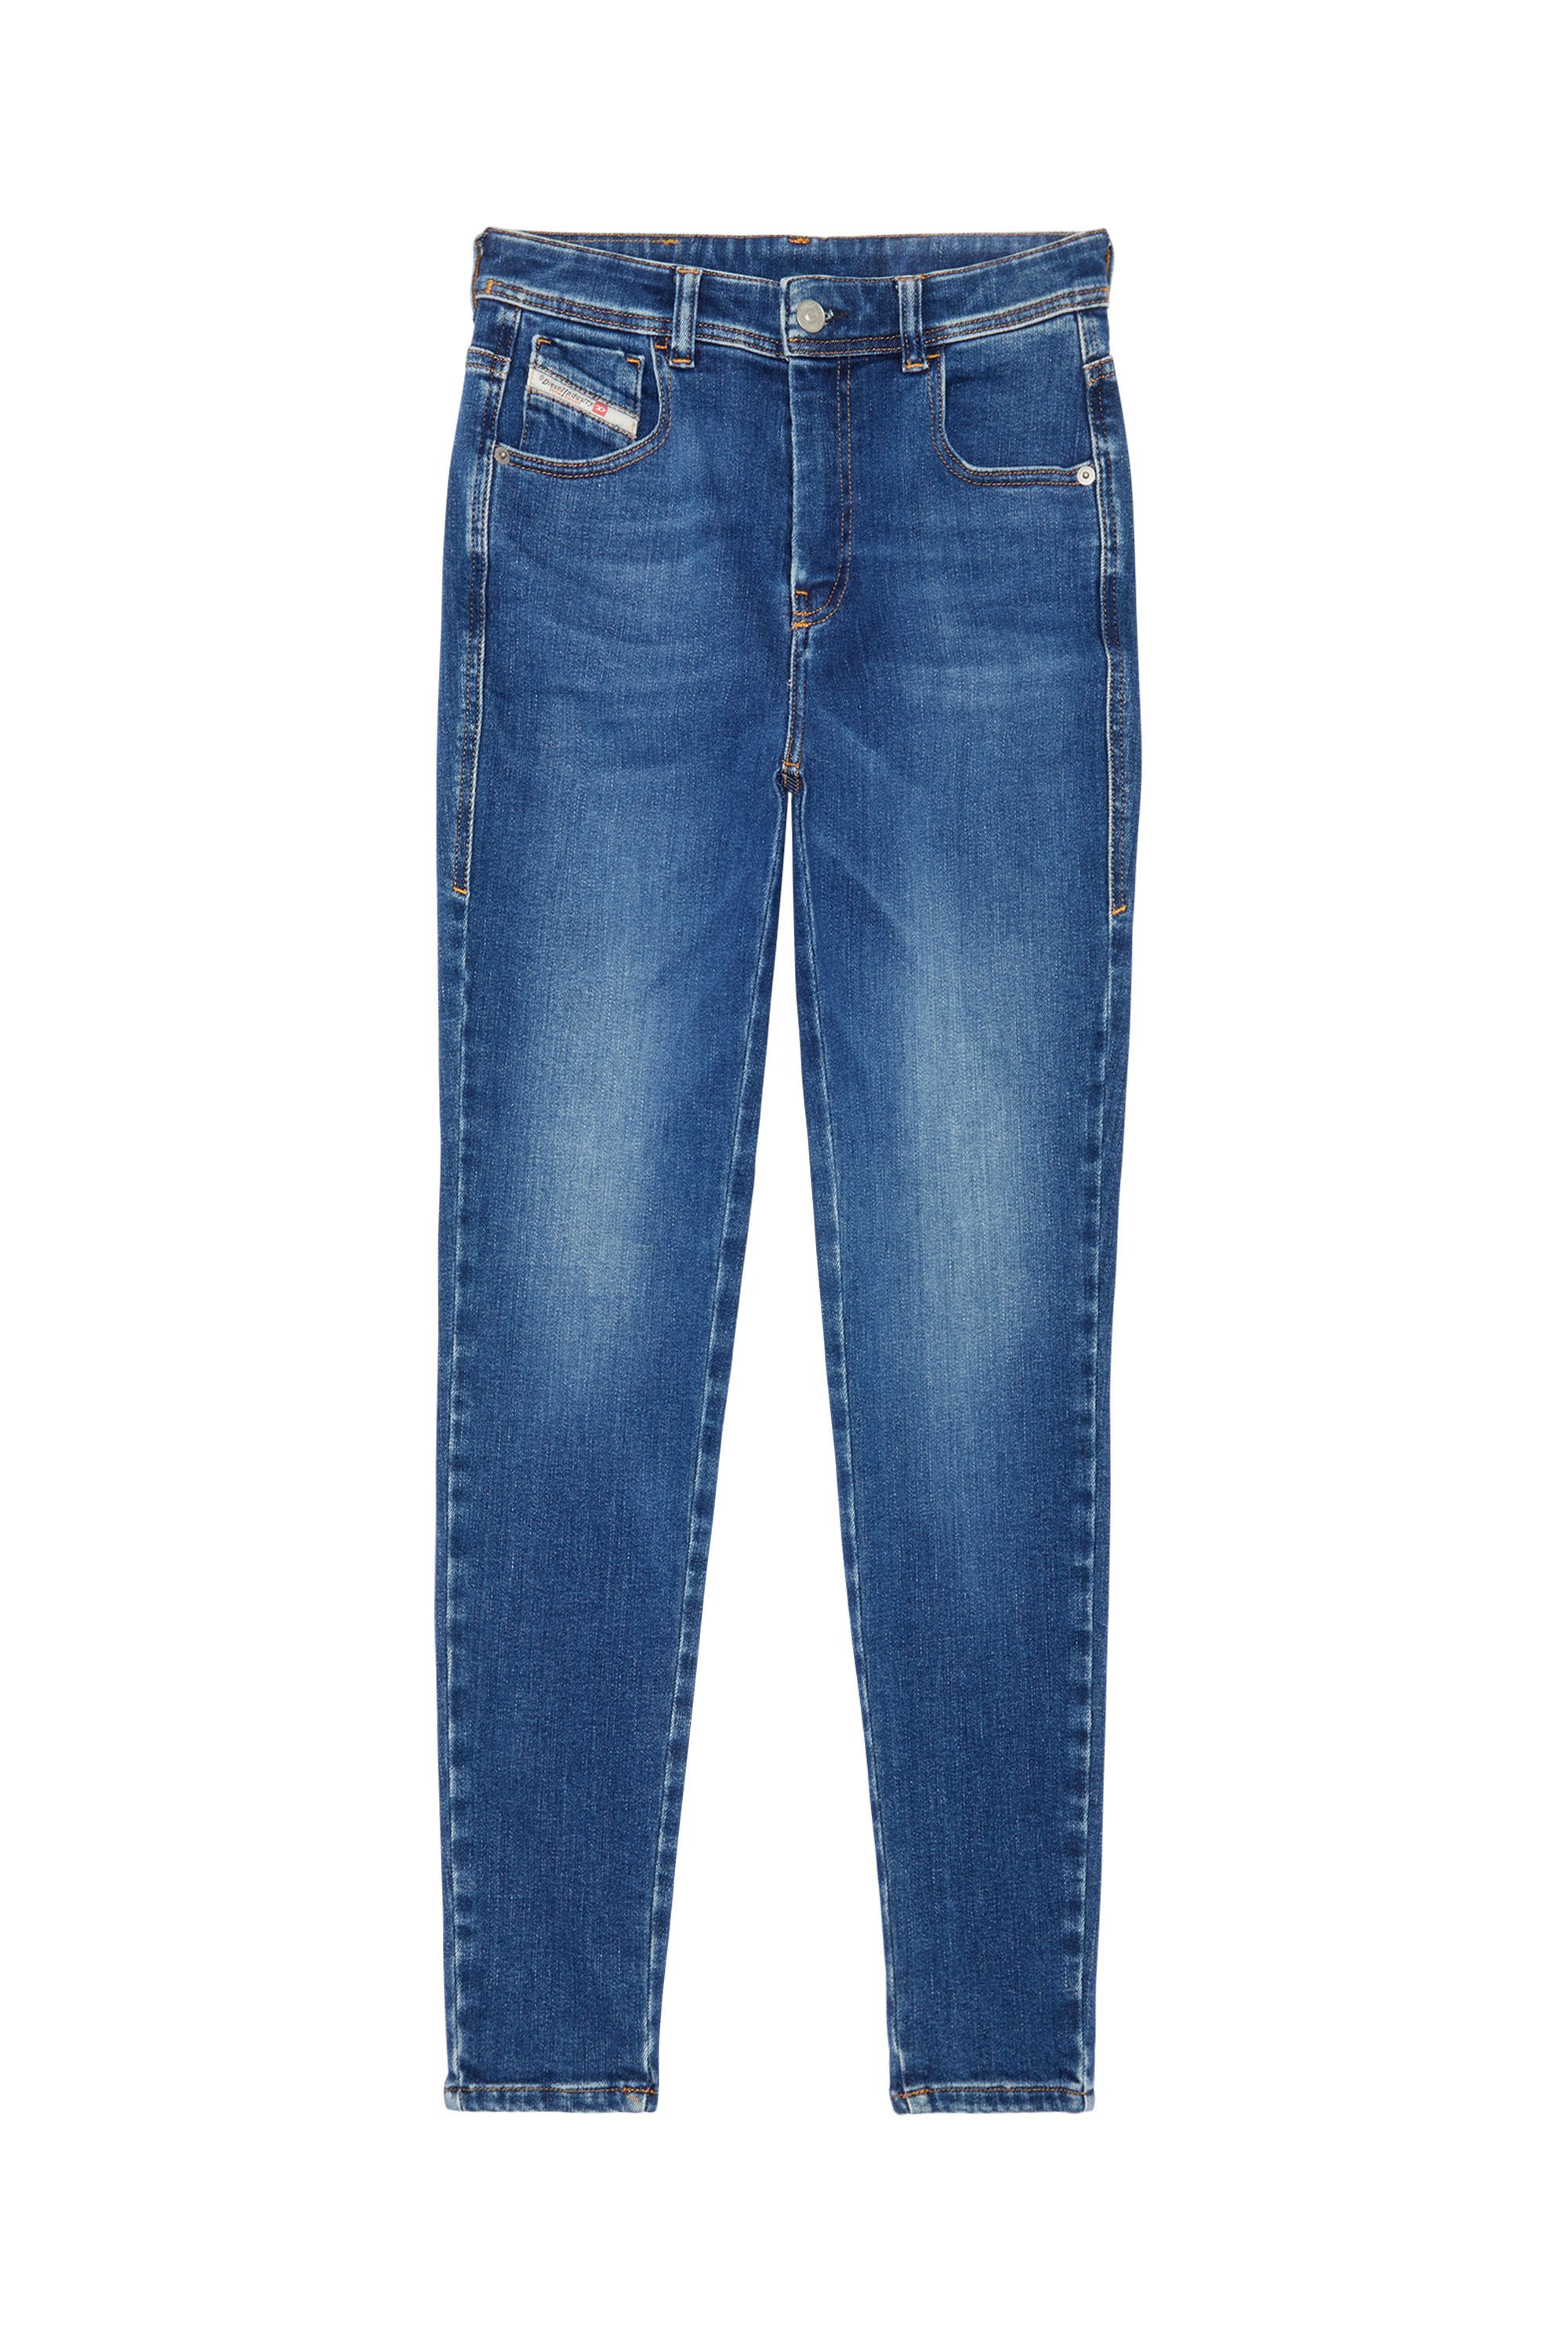 1984 SLANDY-HIGH 09C21 Super skinny Jeans, Mittelblau - Jeans